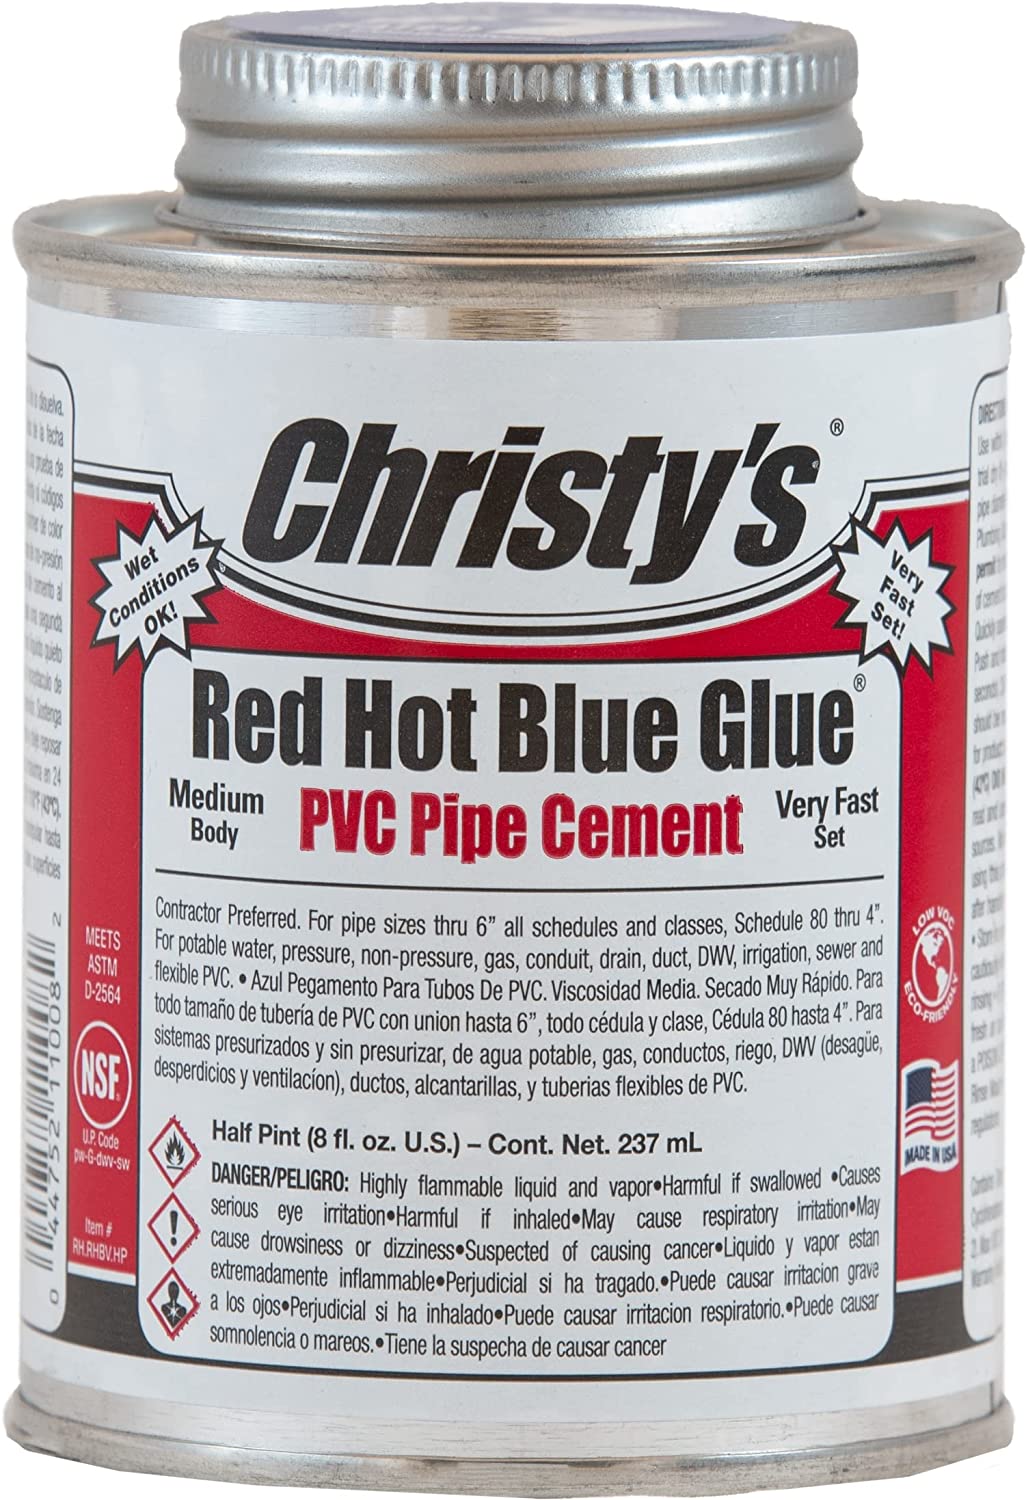 Christy's Red Hot Blue Glue